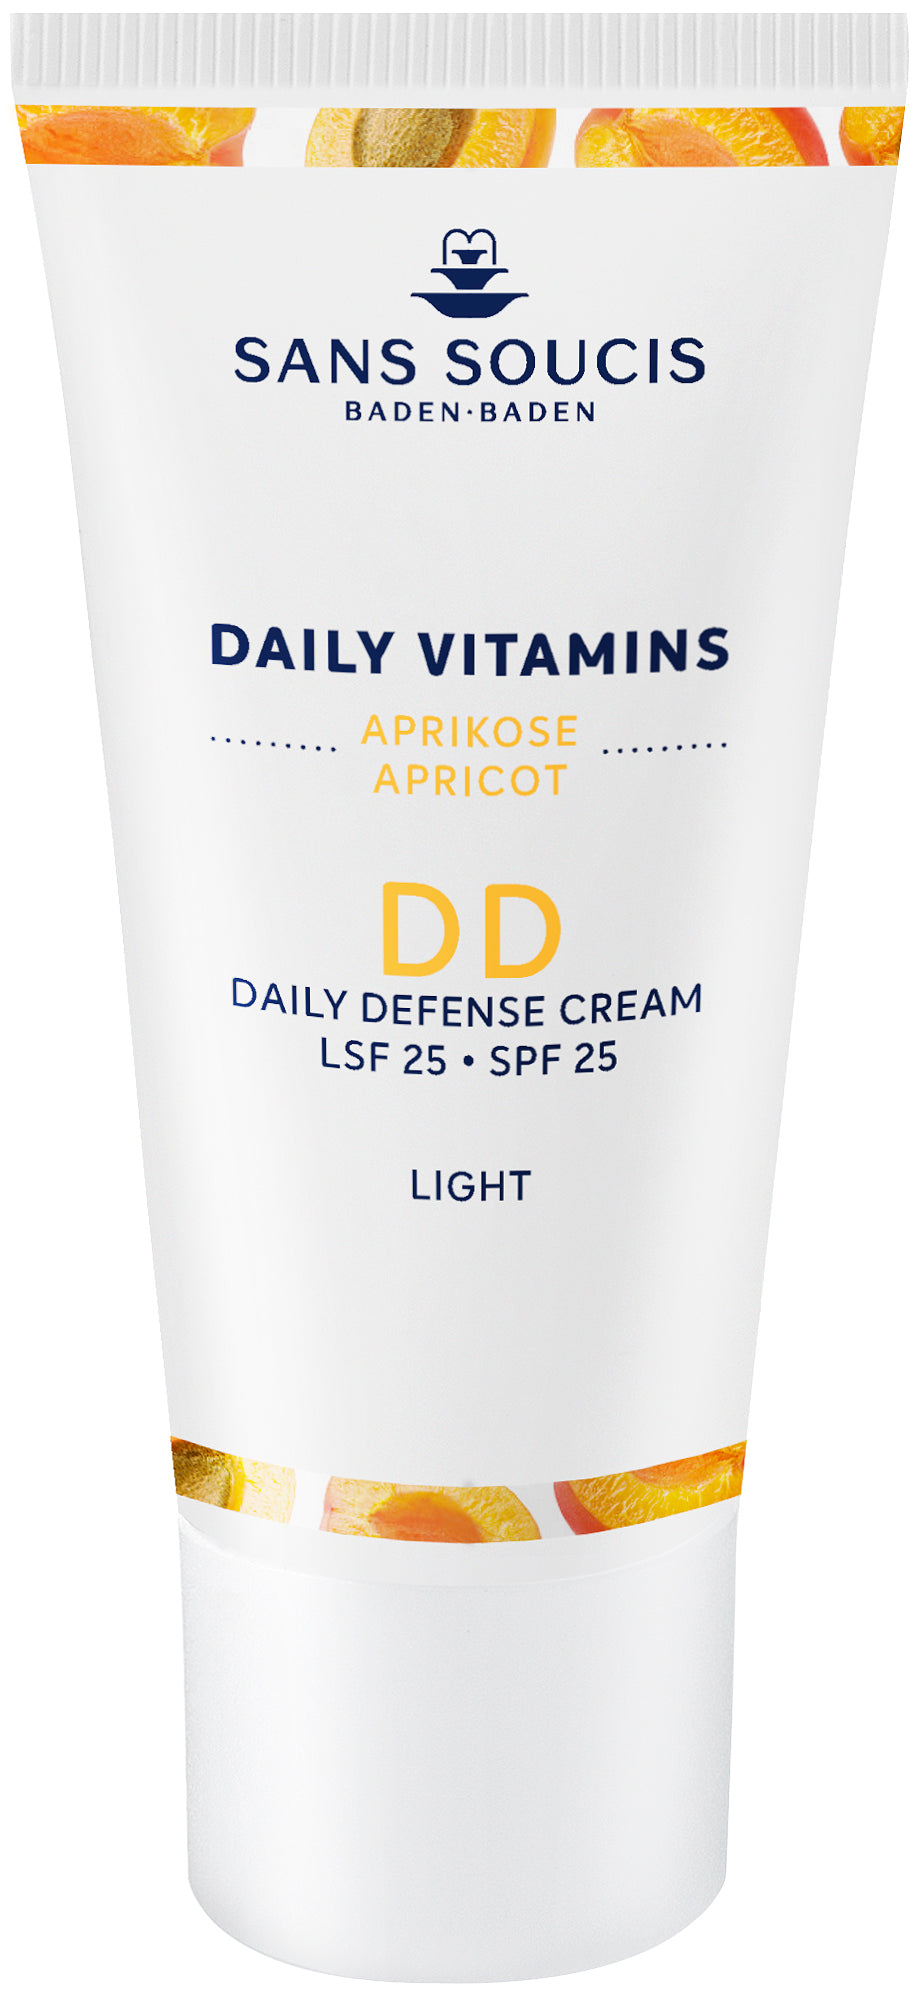 DD Daily Defense Cream light LSF 25